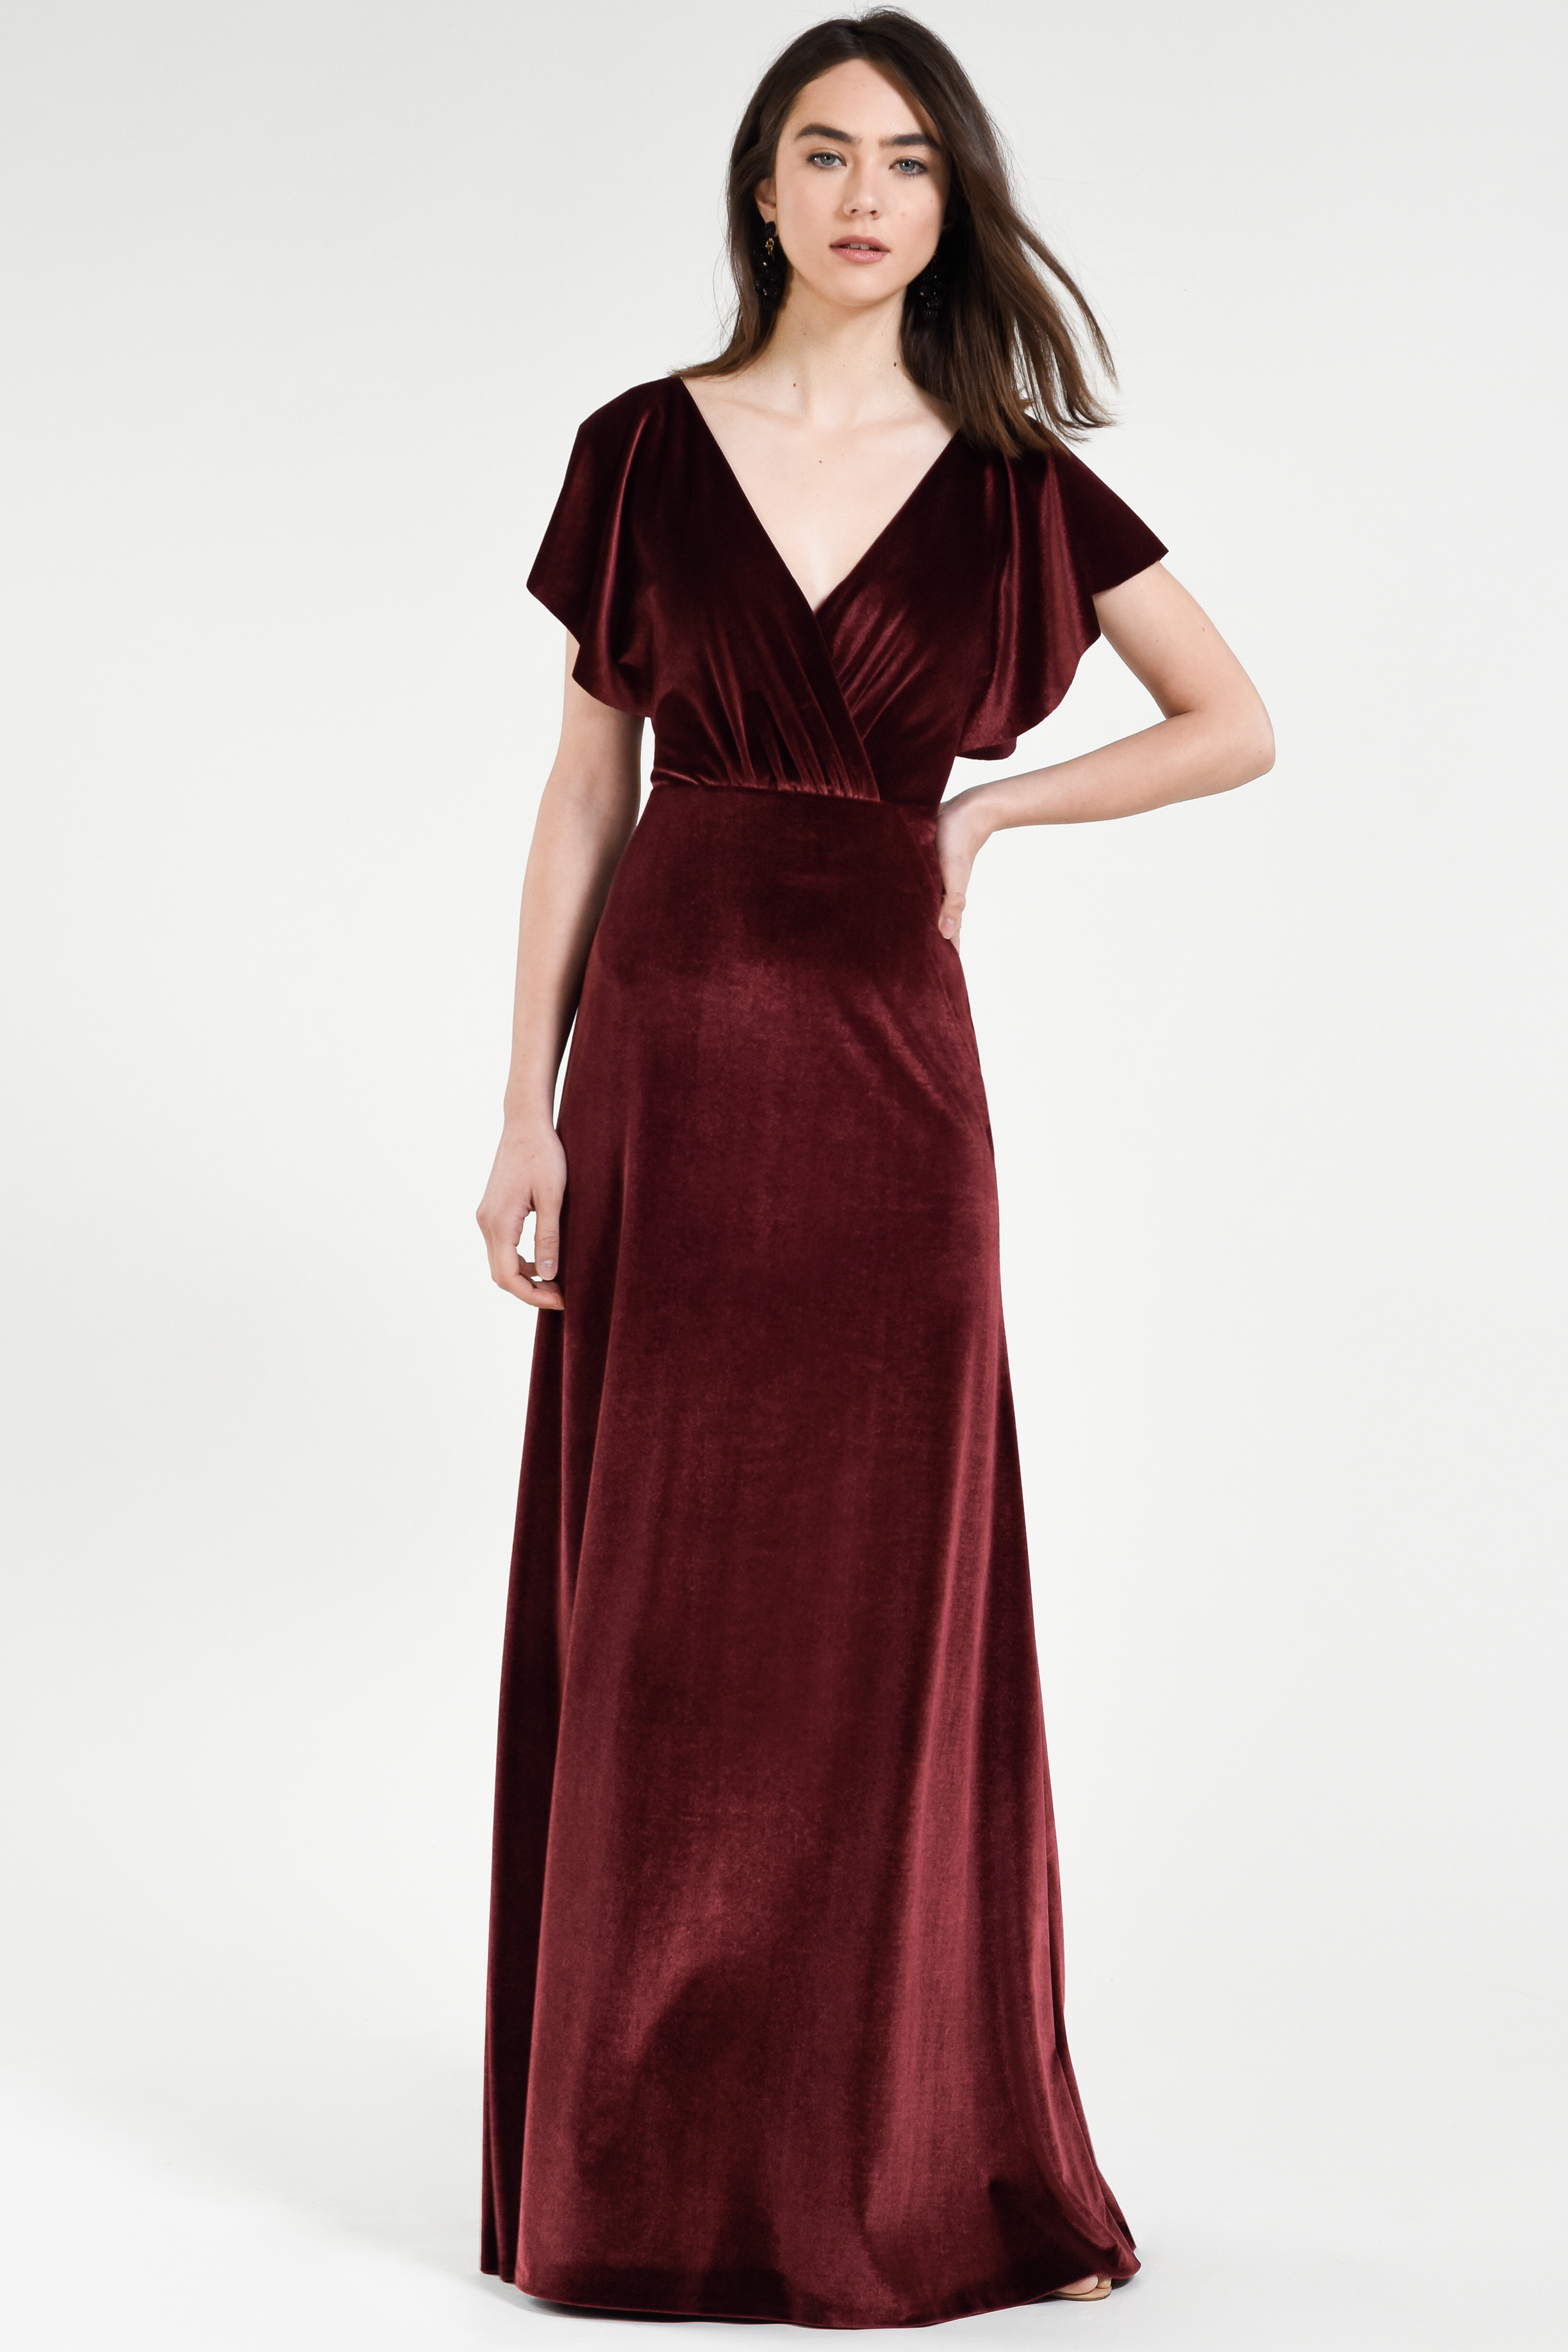 cranberry velvet dress